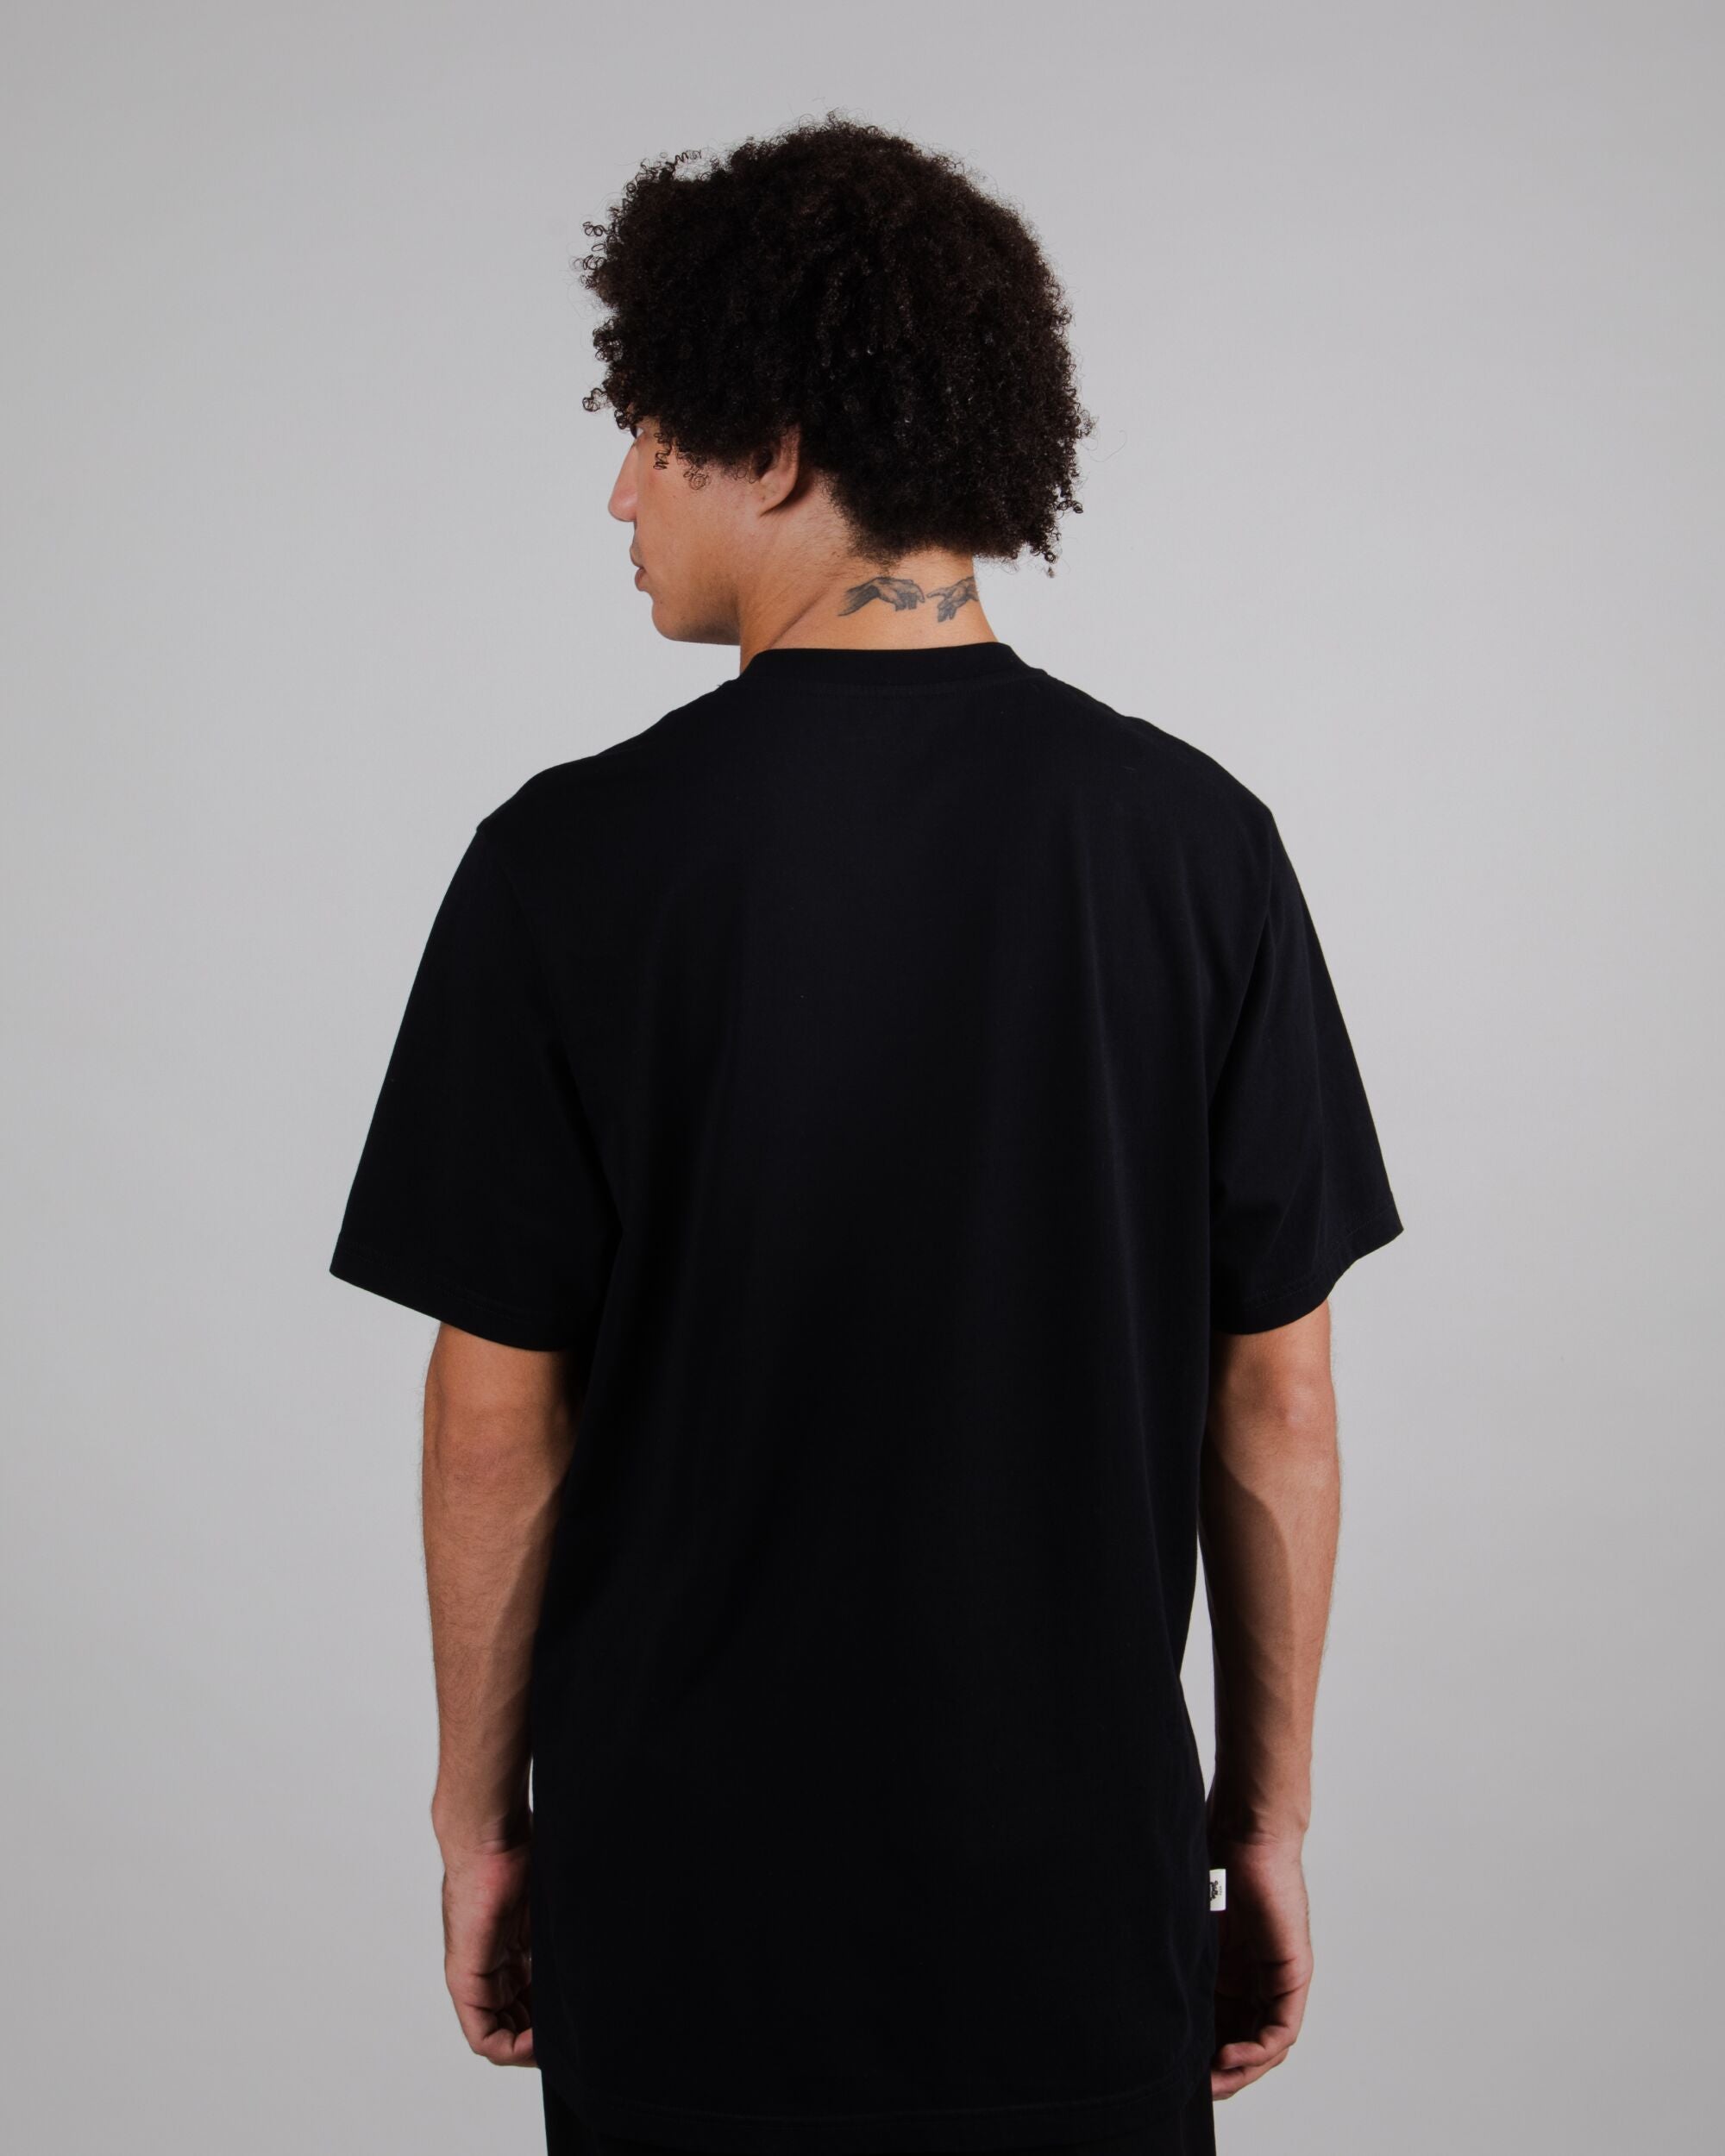 Black Yeye Weller Party shirt made from organic cotton by Brava Fabrics